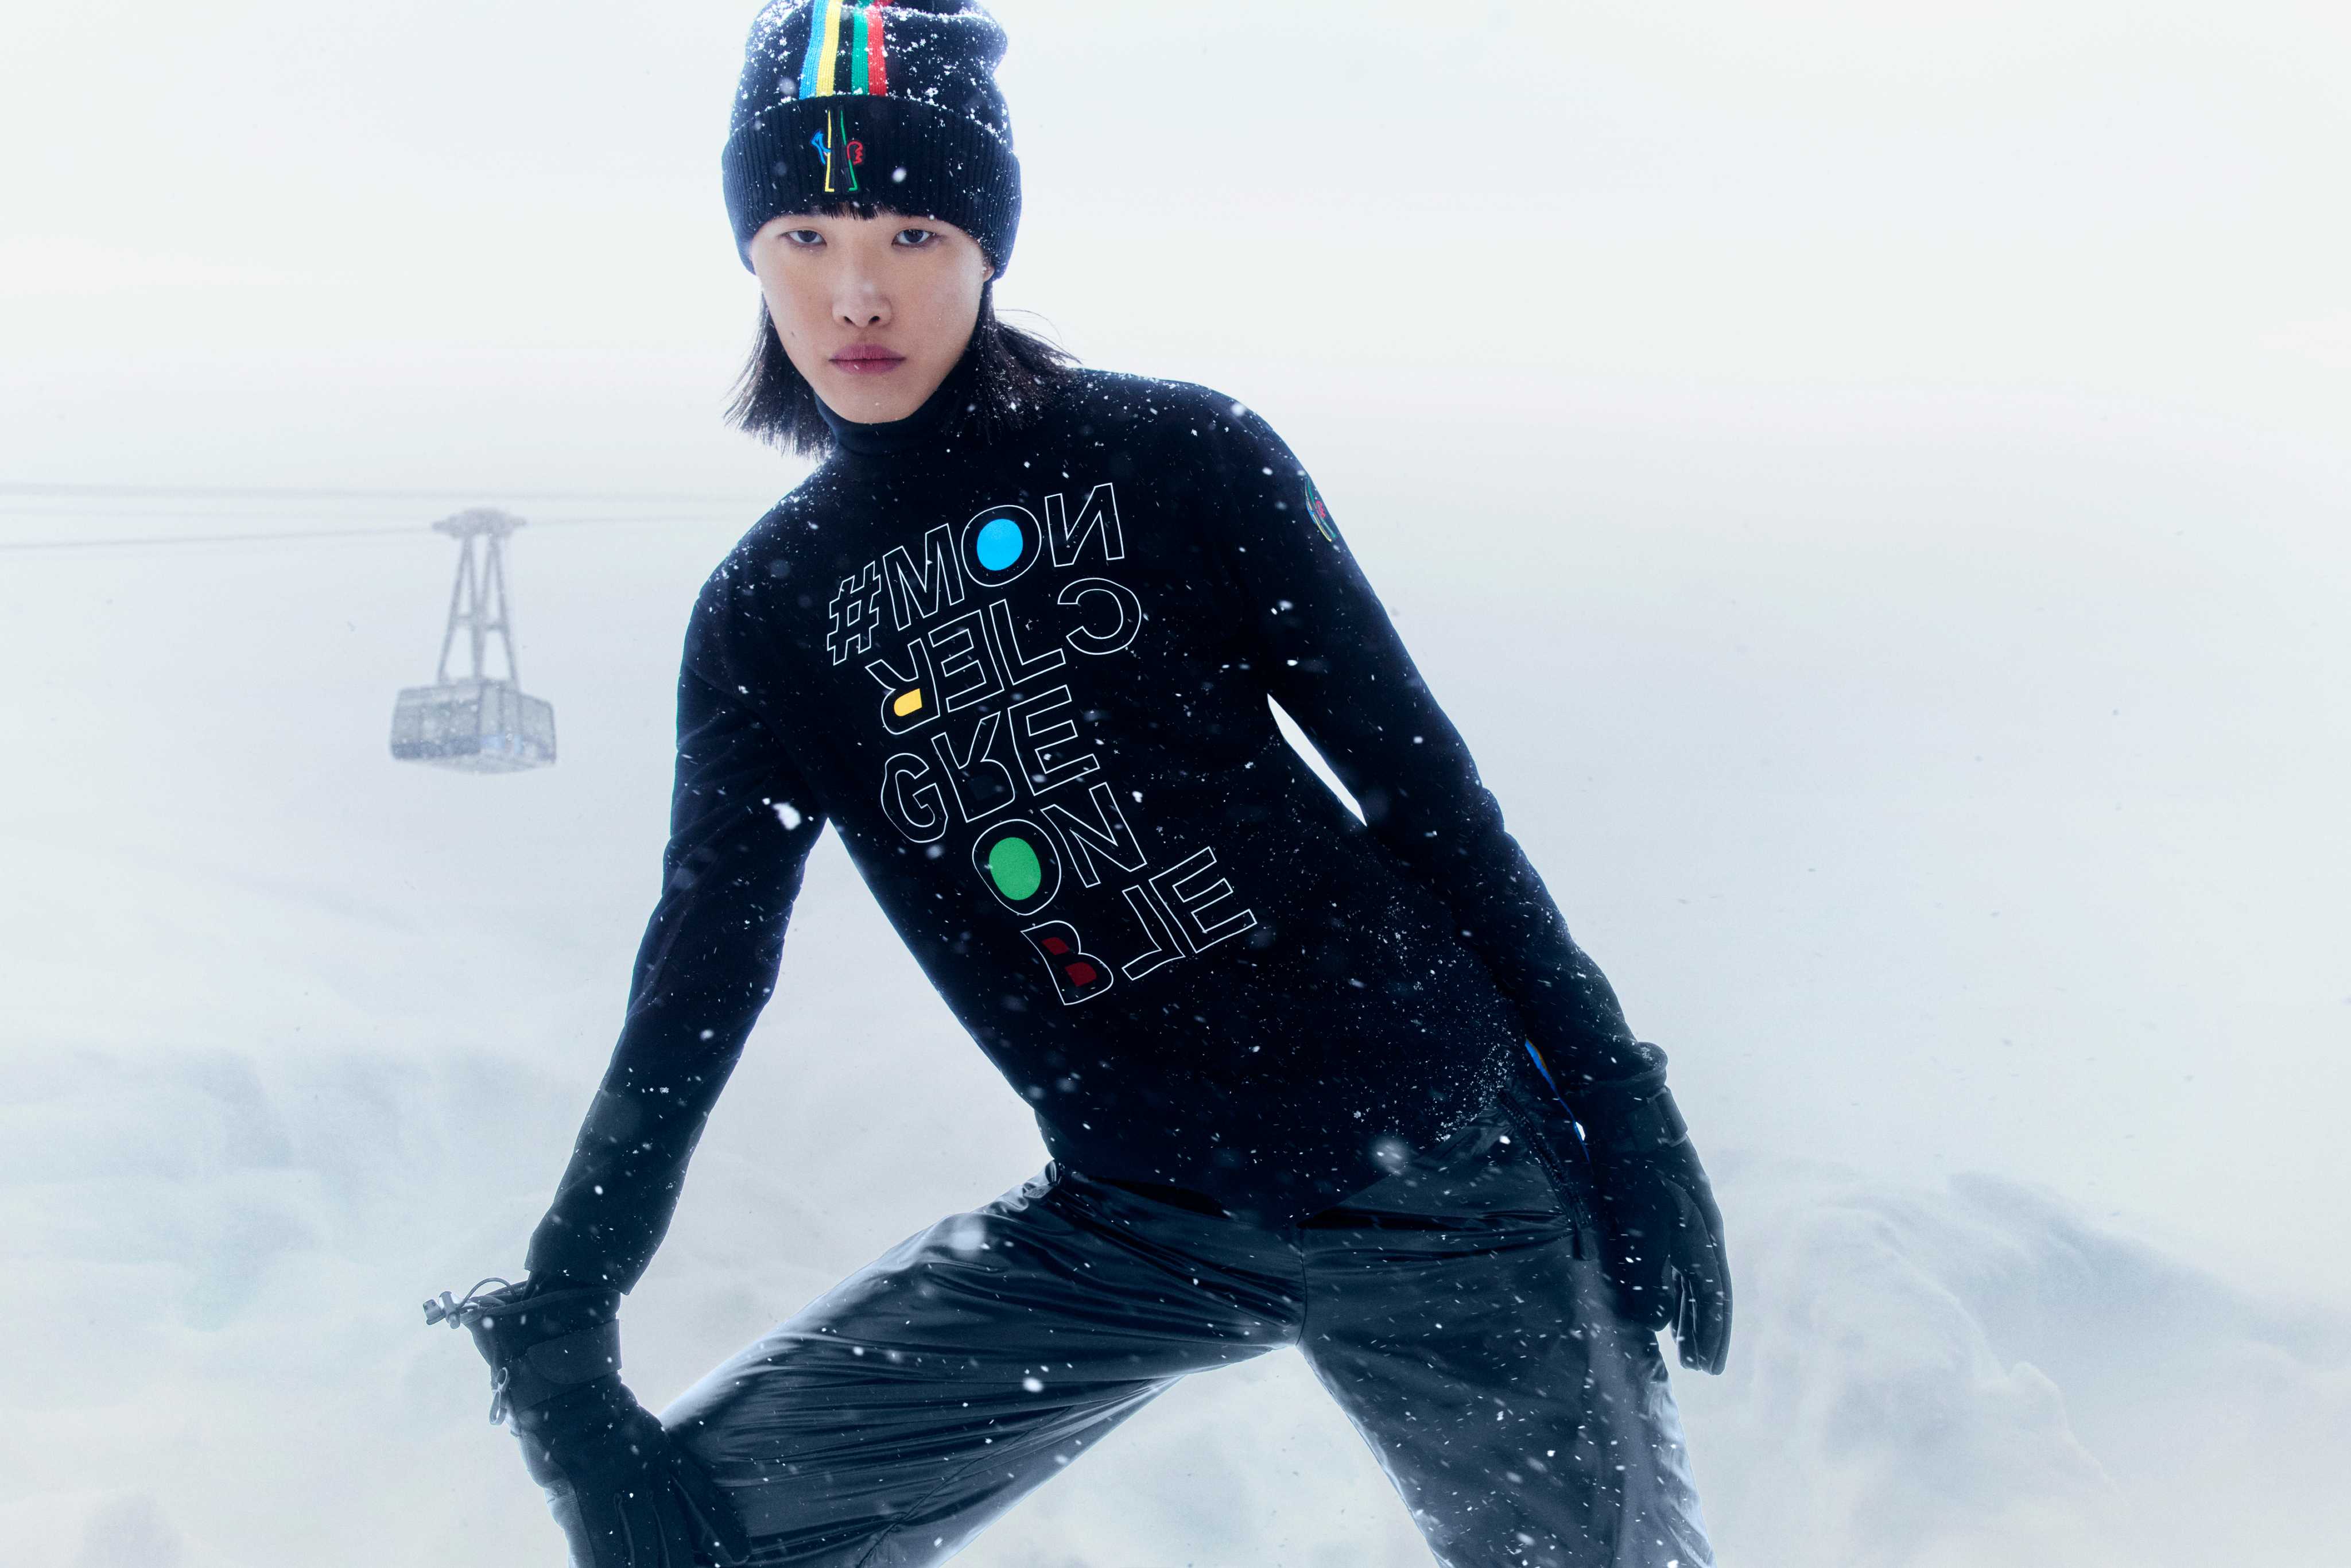 Louis Vuitton Unveils the Ultimate LV Ski Collection